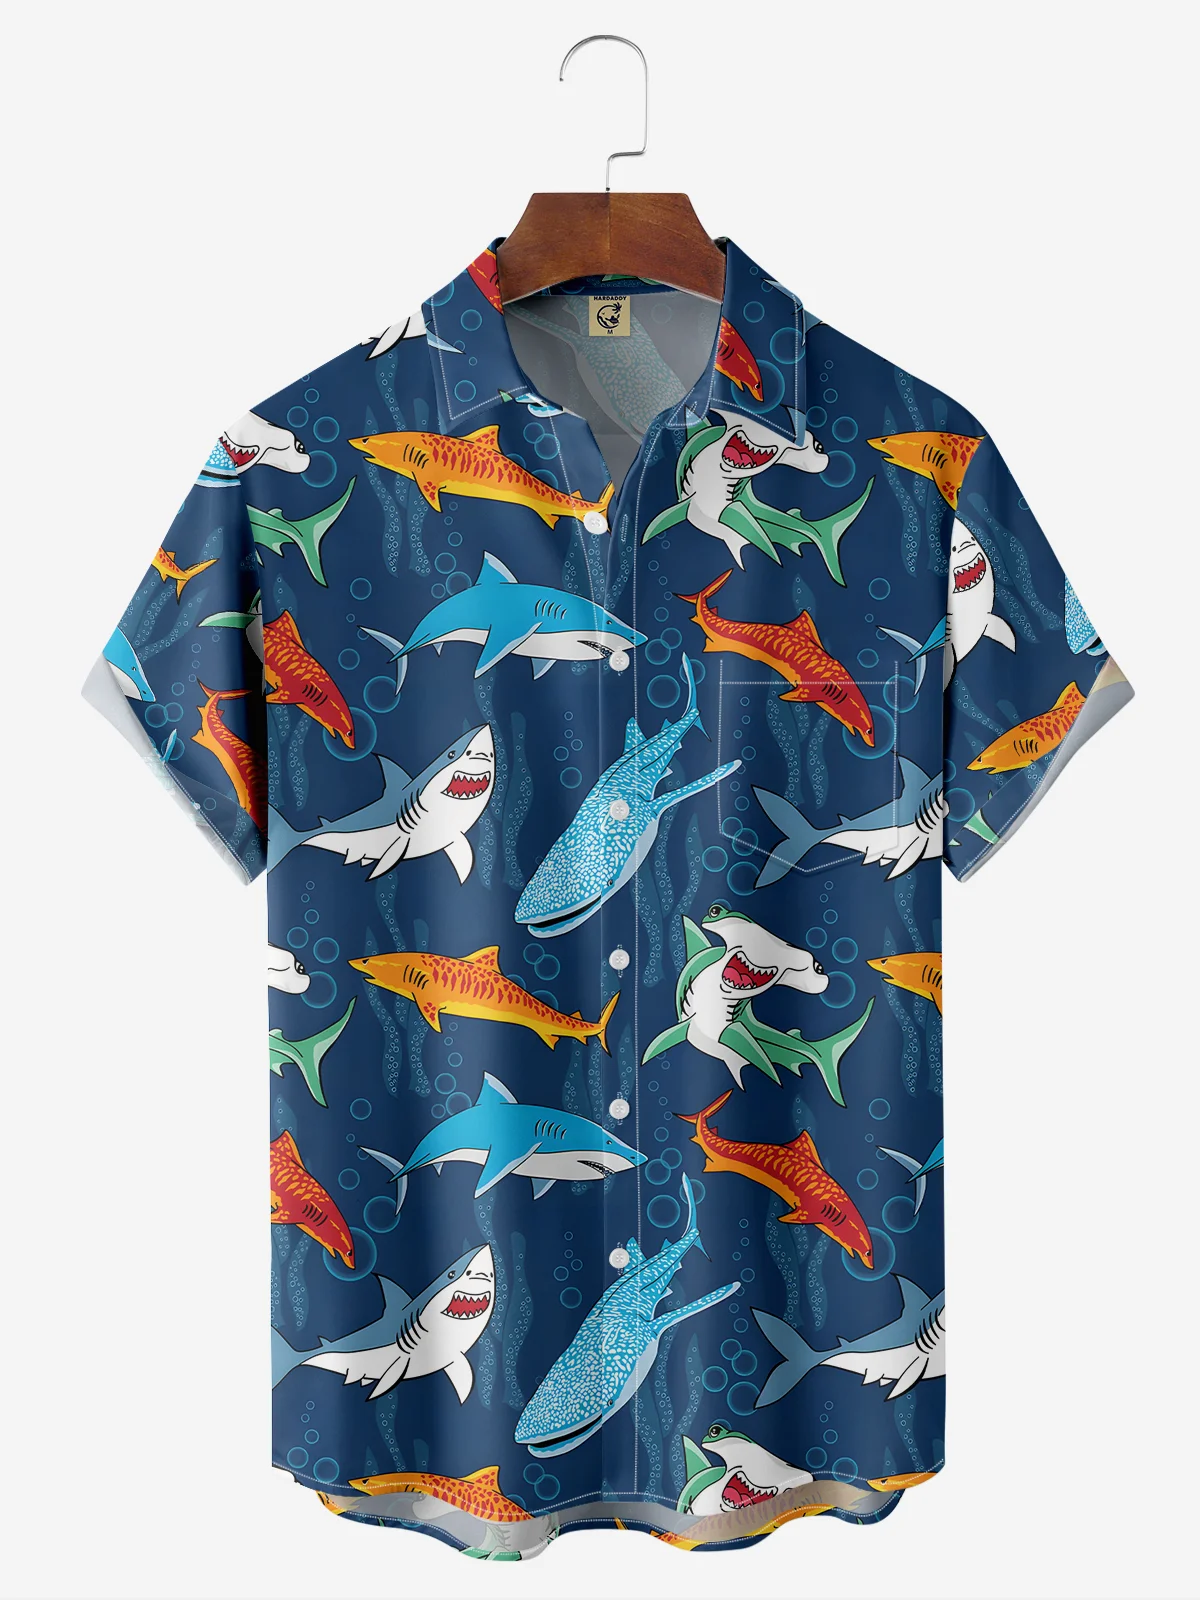 Moisture-Wicking Sea Animal Whale Shark Print Shirt